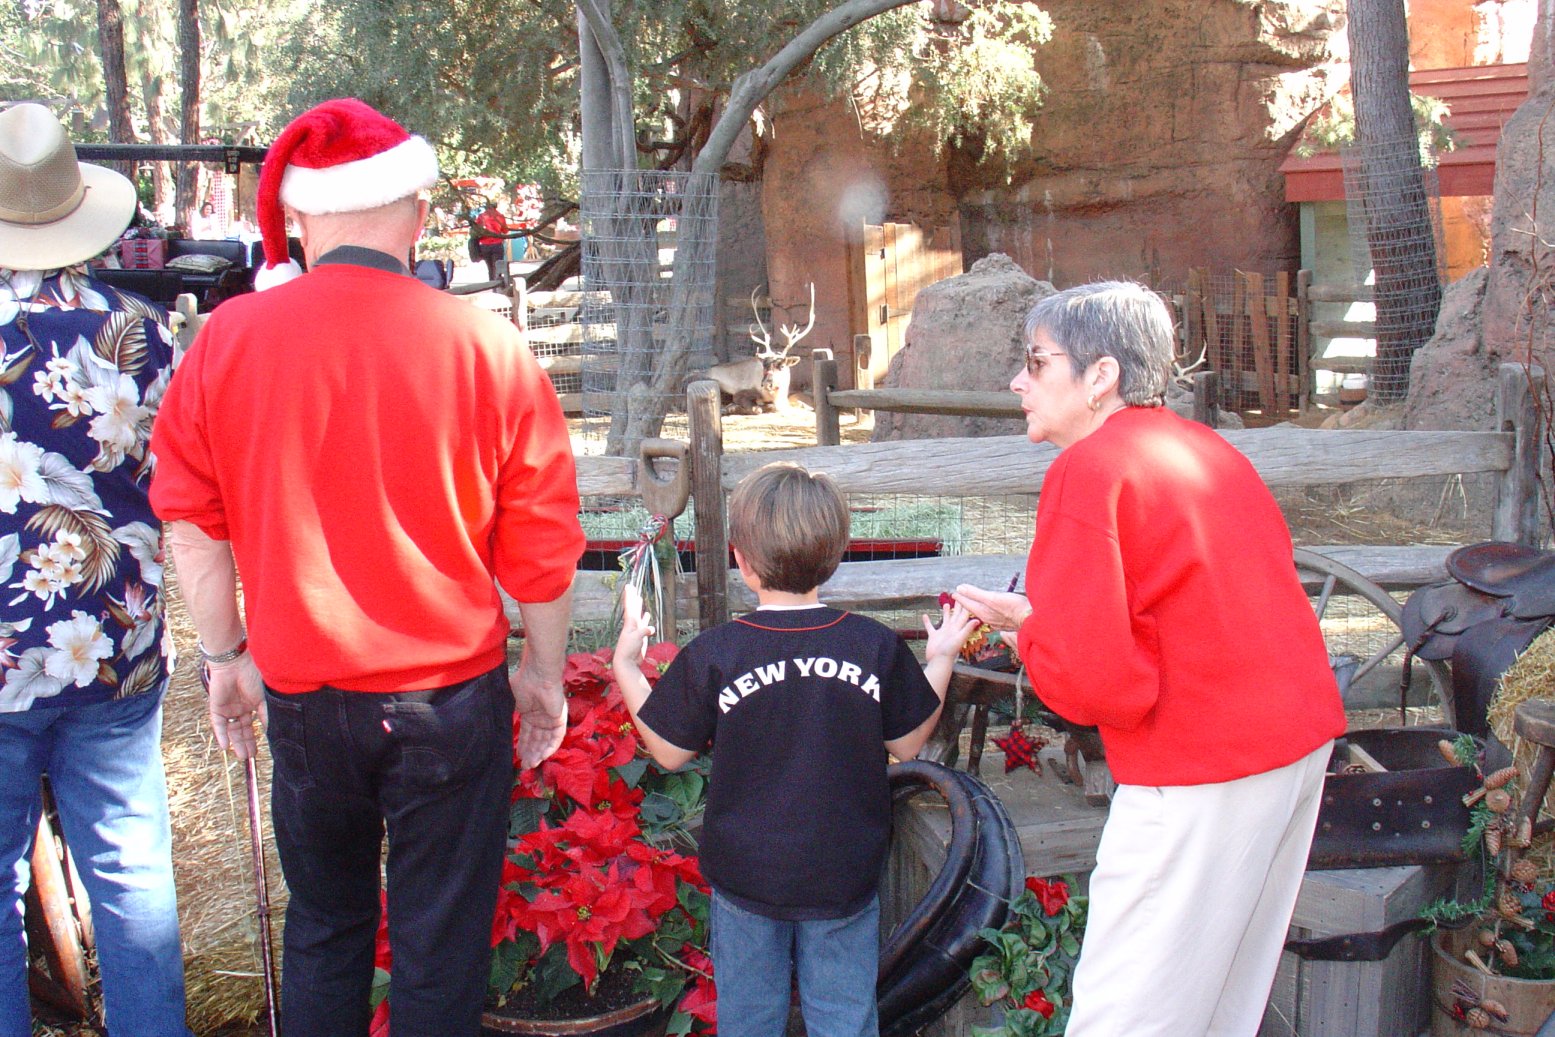 Christmas Eve At Disneyland 2005